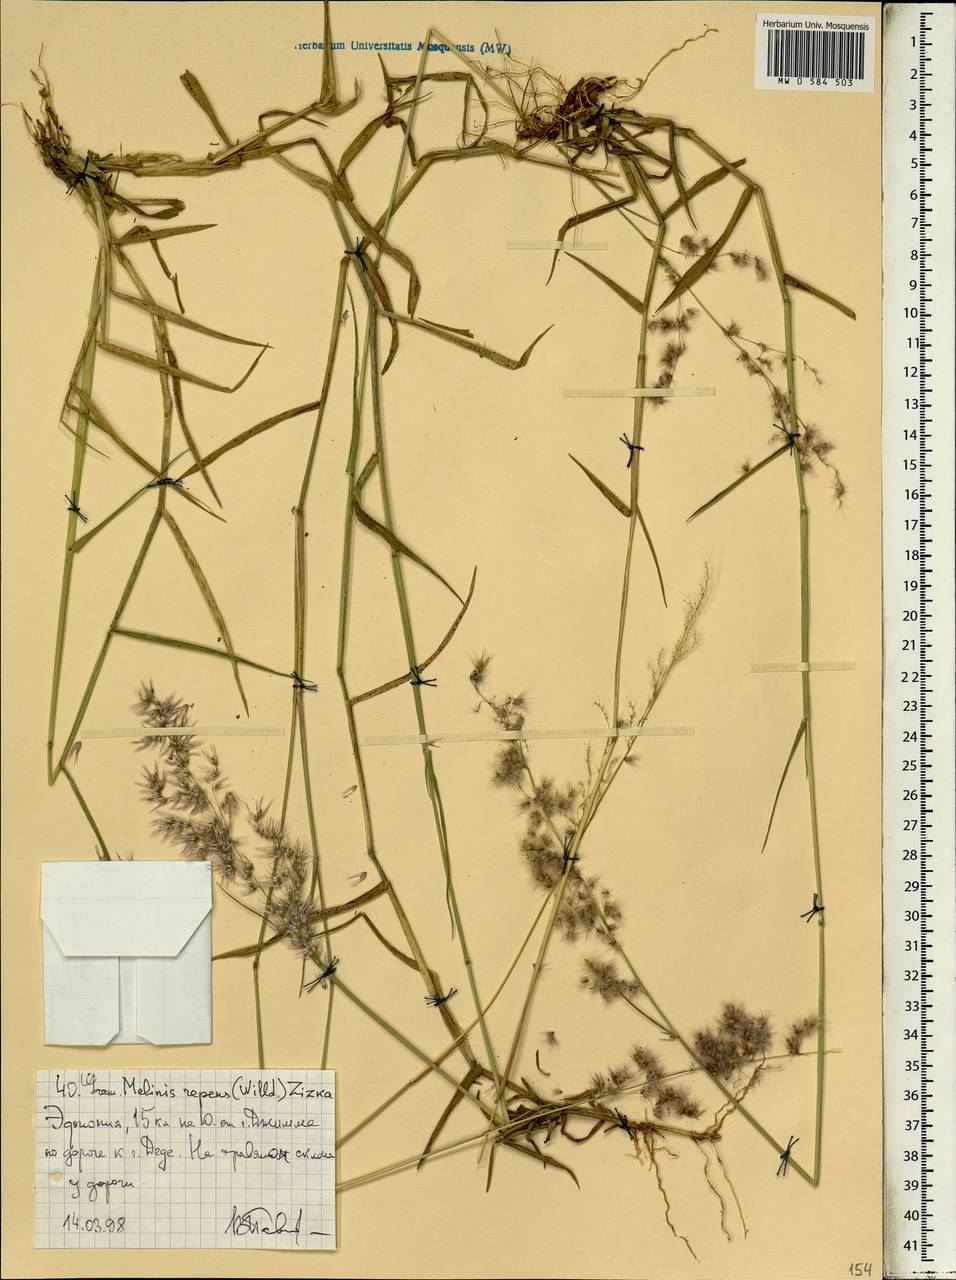 Melinis repens (Willd.) Zizka, Africa (AFR) (Ethiopia)